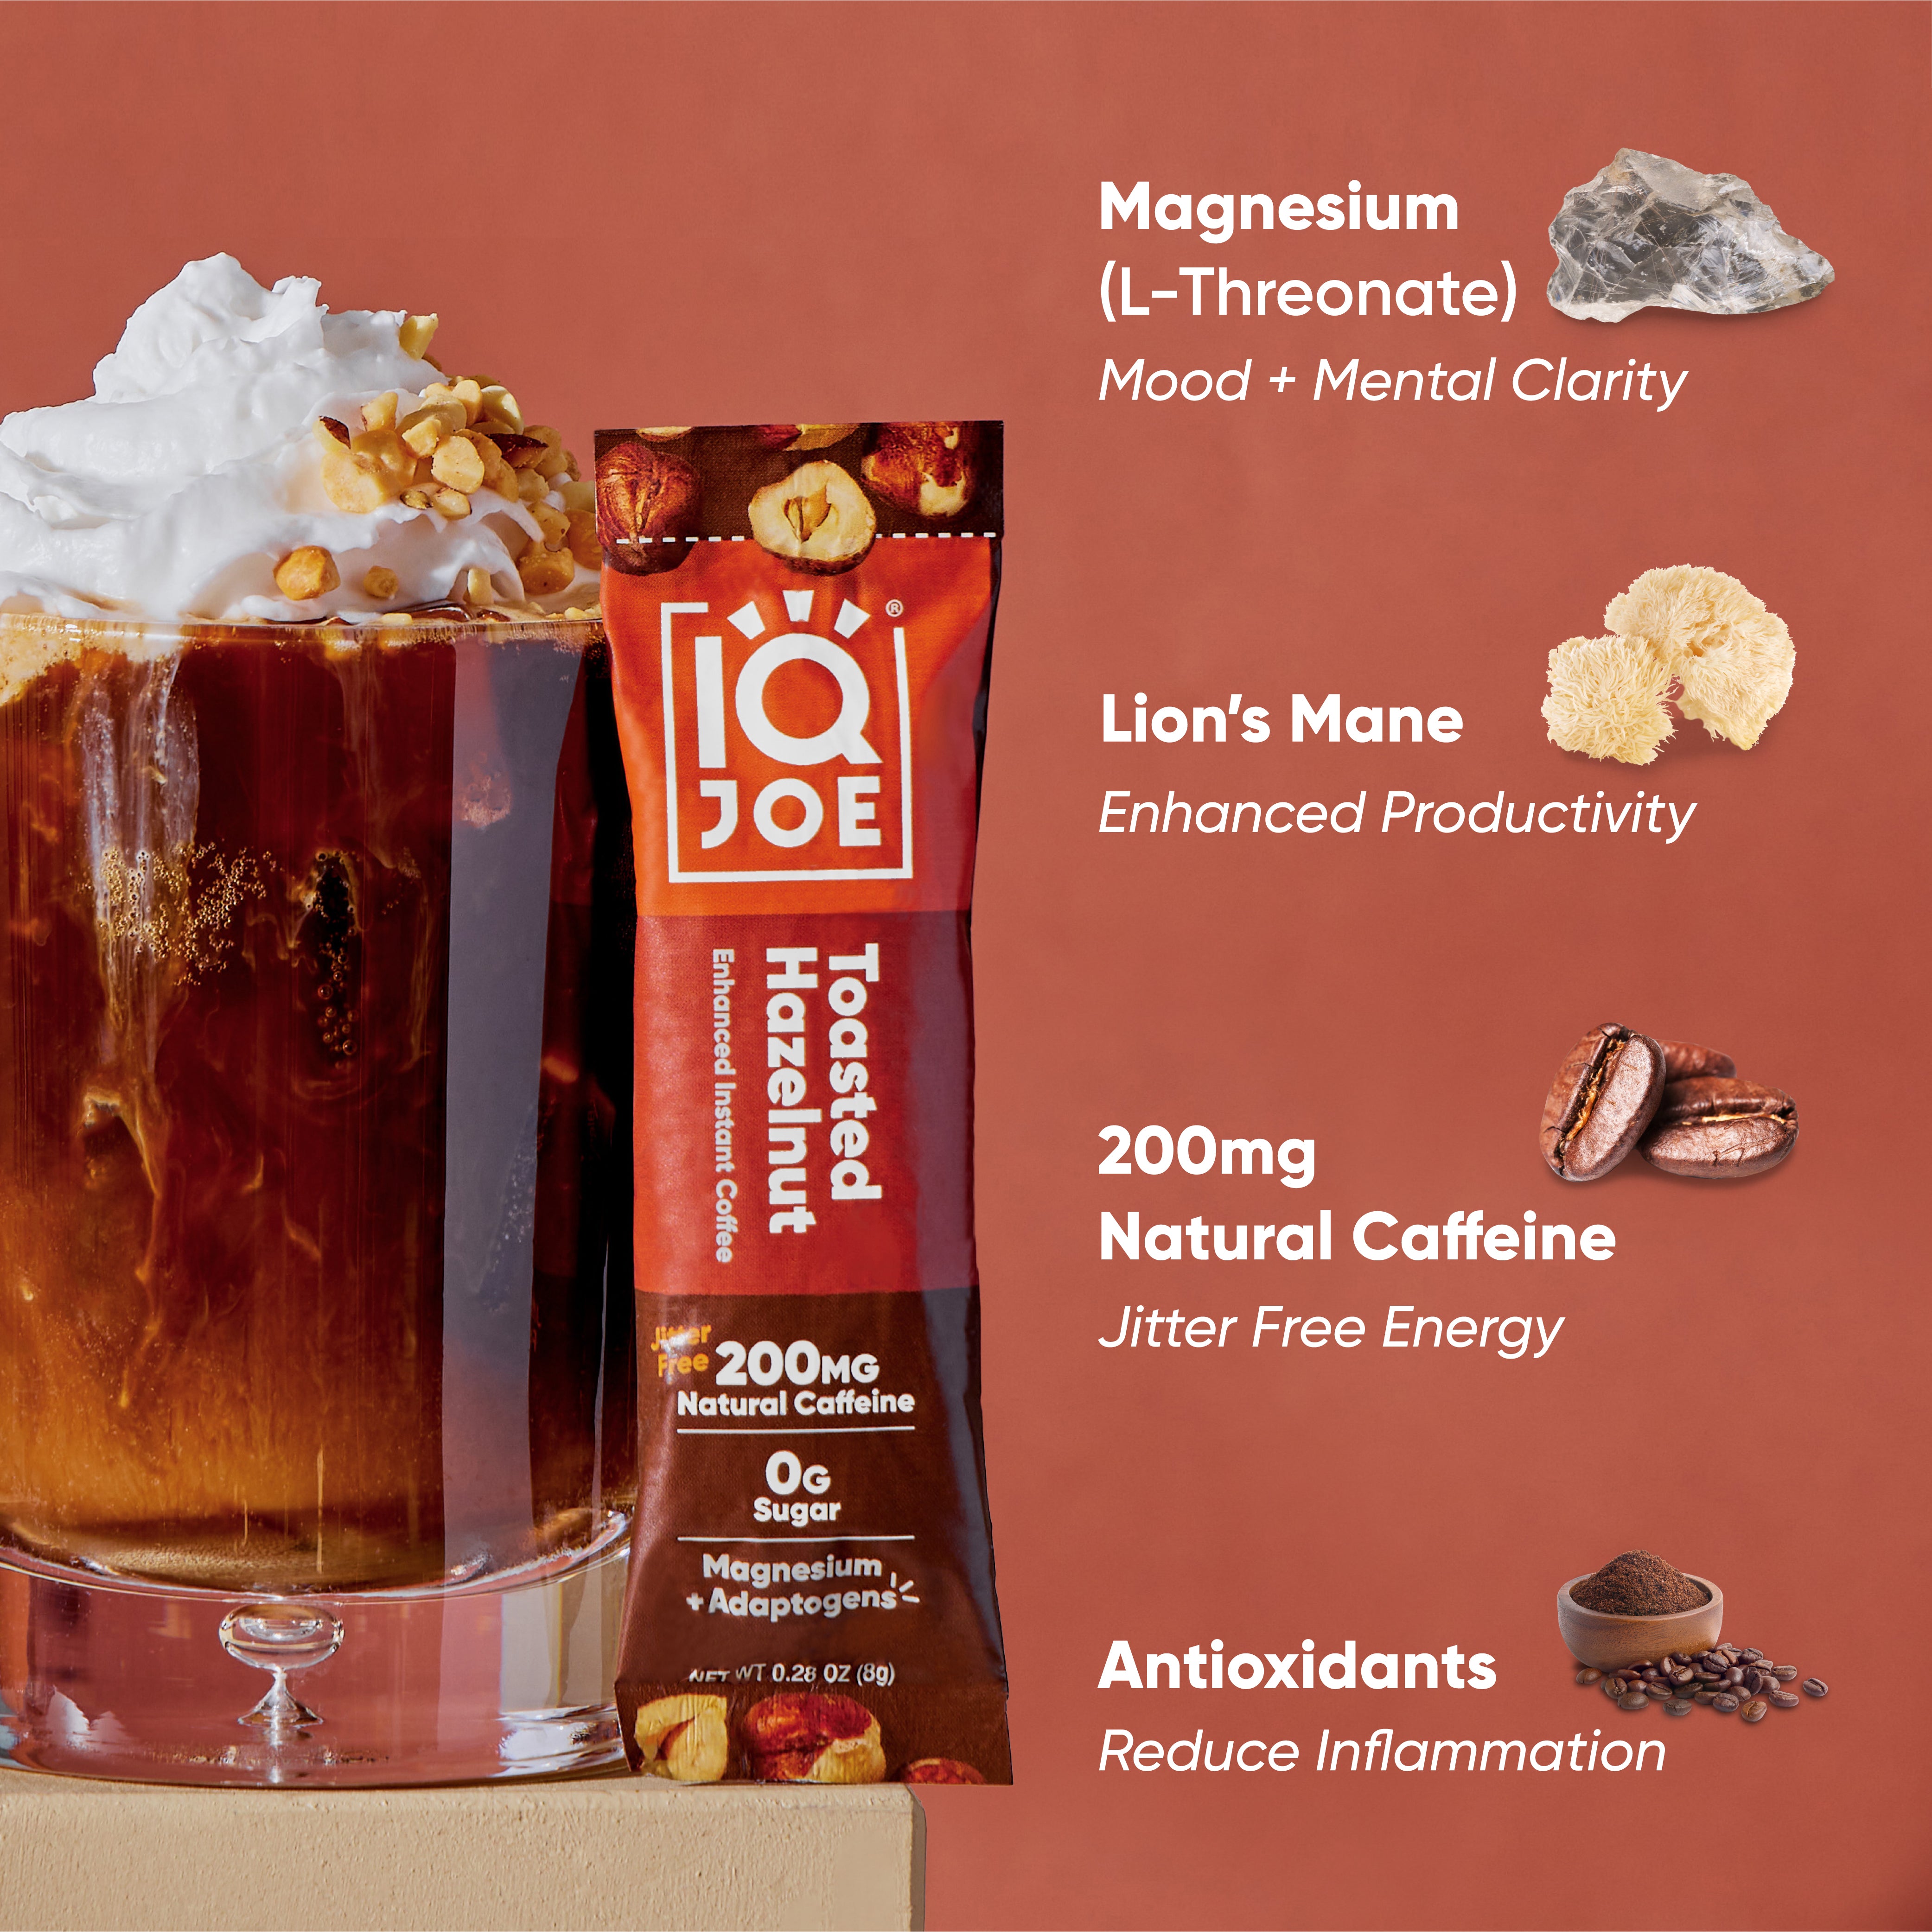 IQJOE Toasted Hazelnut Nootropic Coffee with Magnesium L-Threonate, Lion's Mane Mushroom, 200mg of Natural Caffeine, Antioxidants.